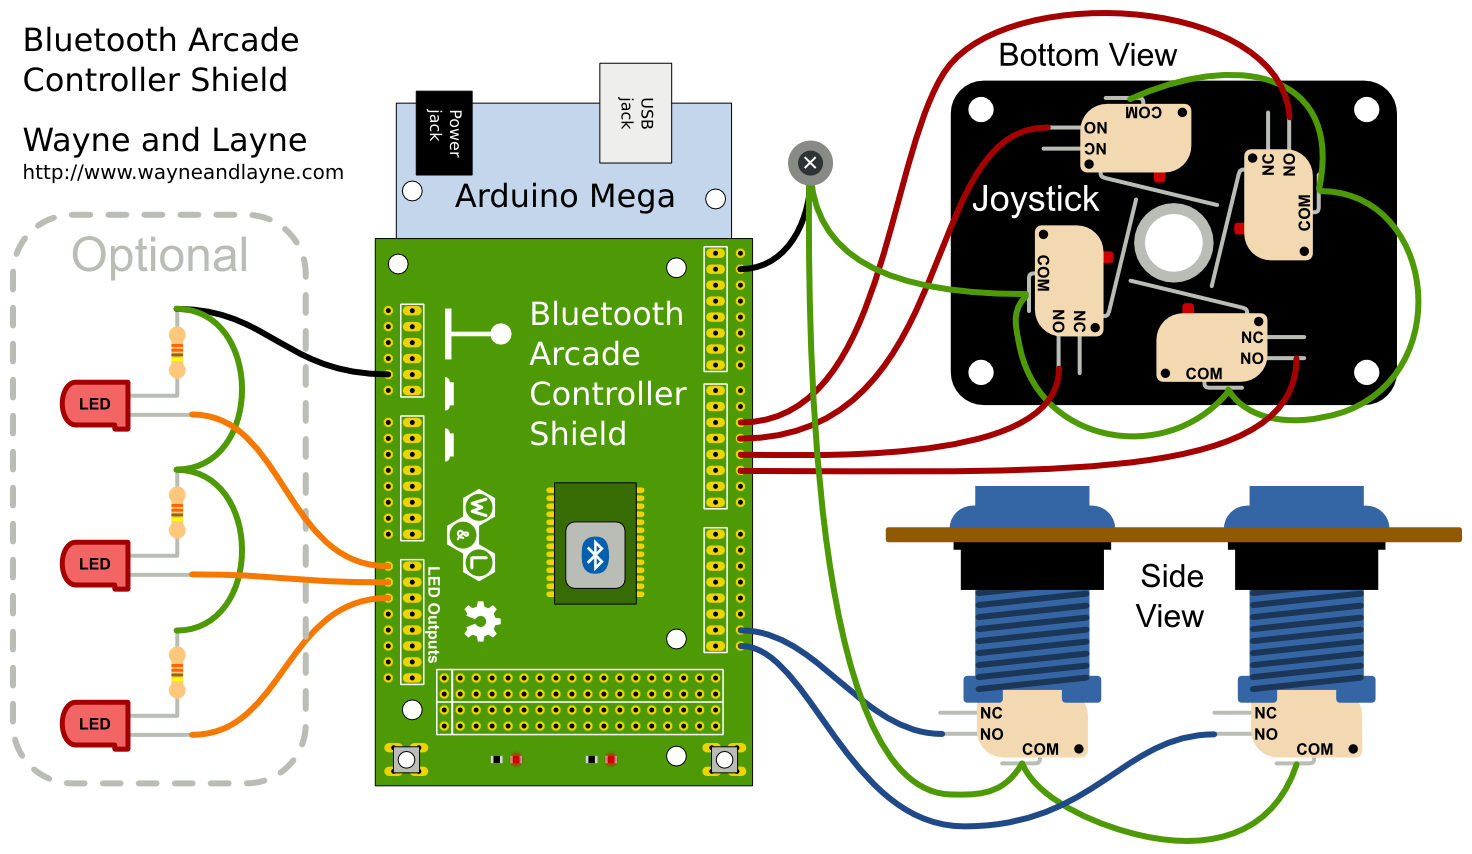 Bluetooth Arcade Controller system-level diagram